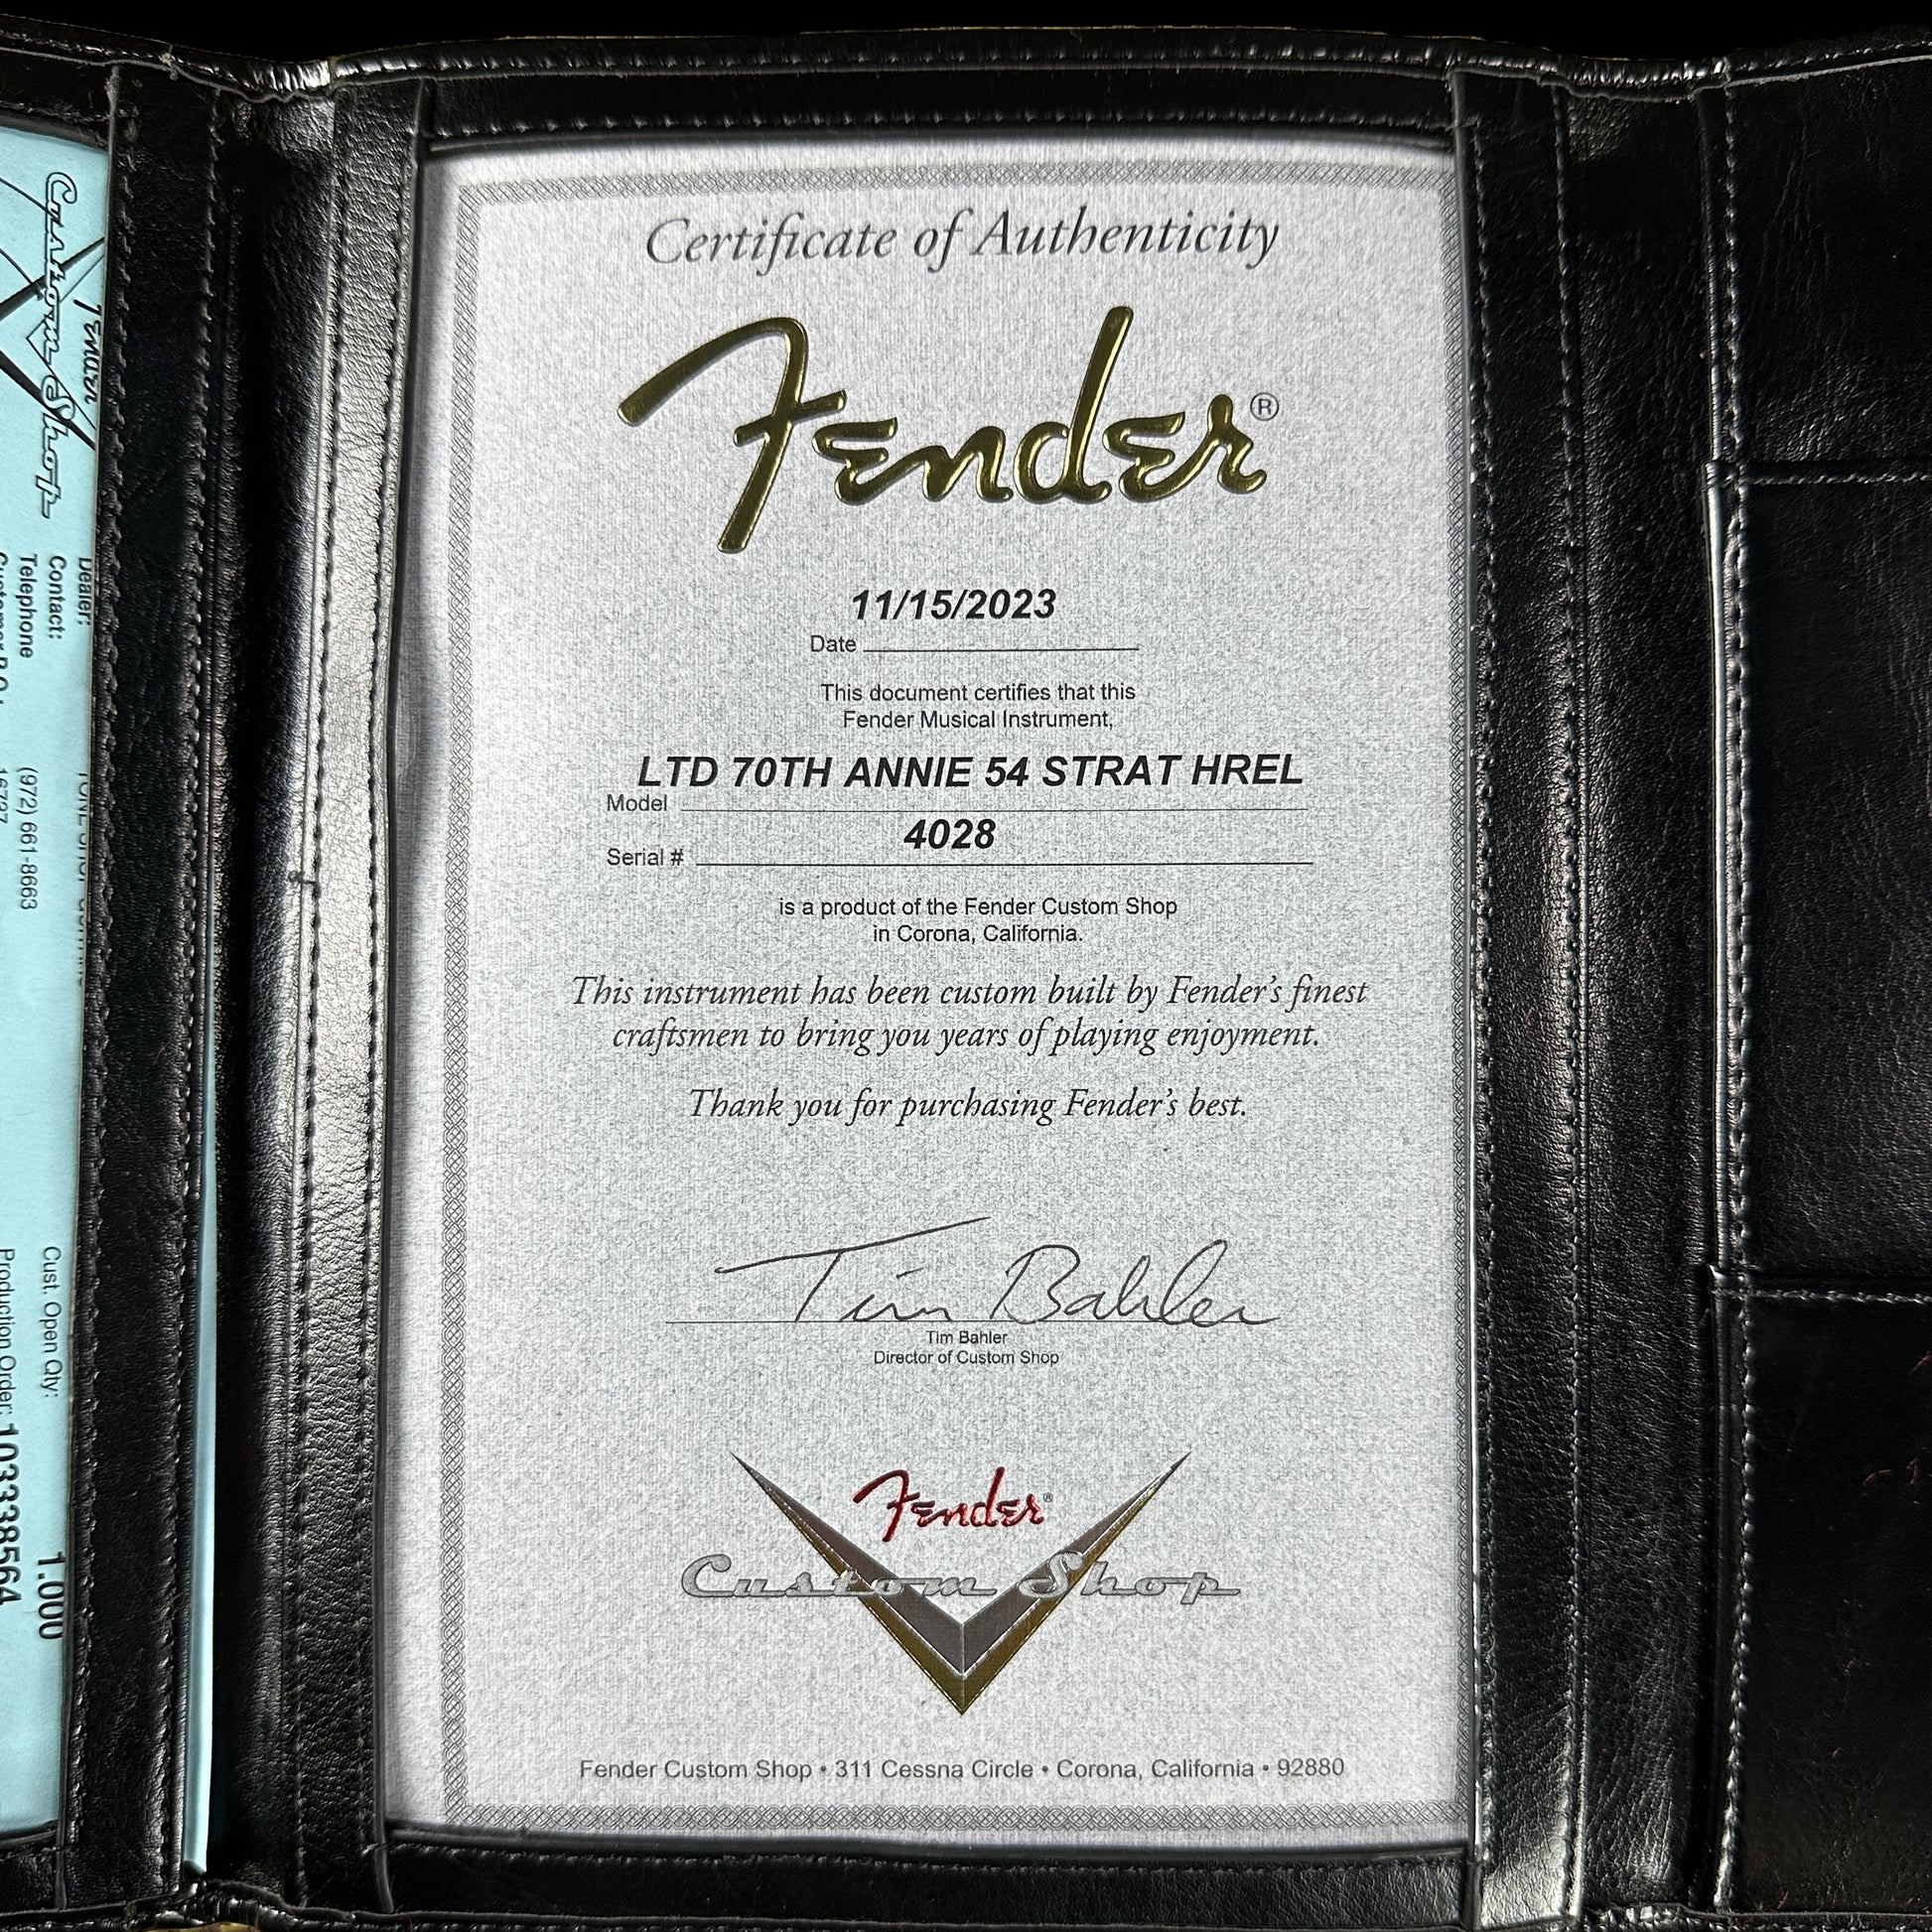 Certificate of authenticity for Fender Custom Shop LTD 70th Anniversary 1954 Stratocaster Heavy Relic 2-Color Sunburst.